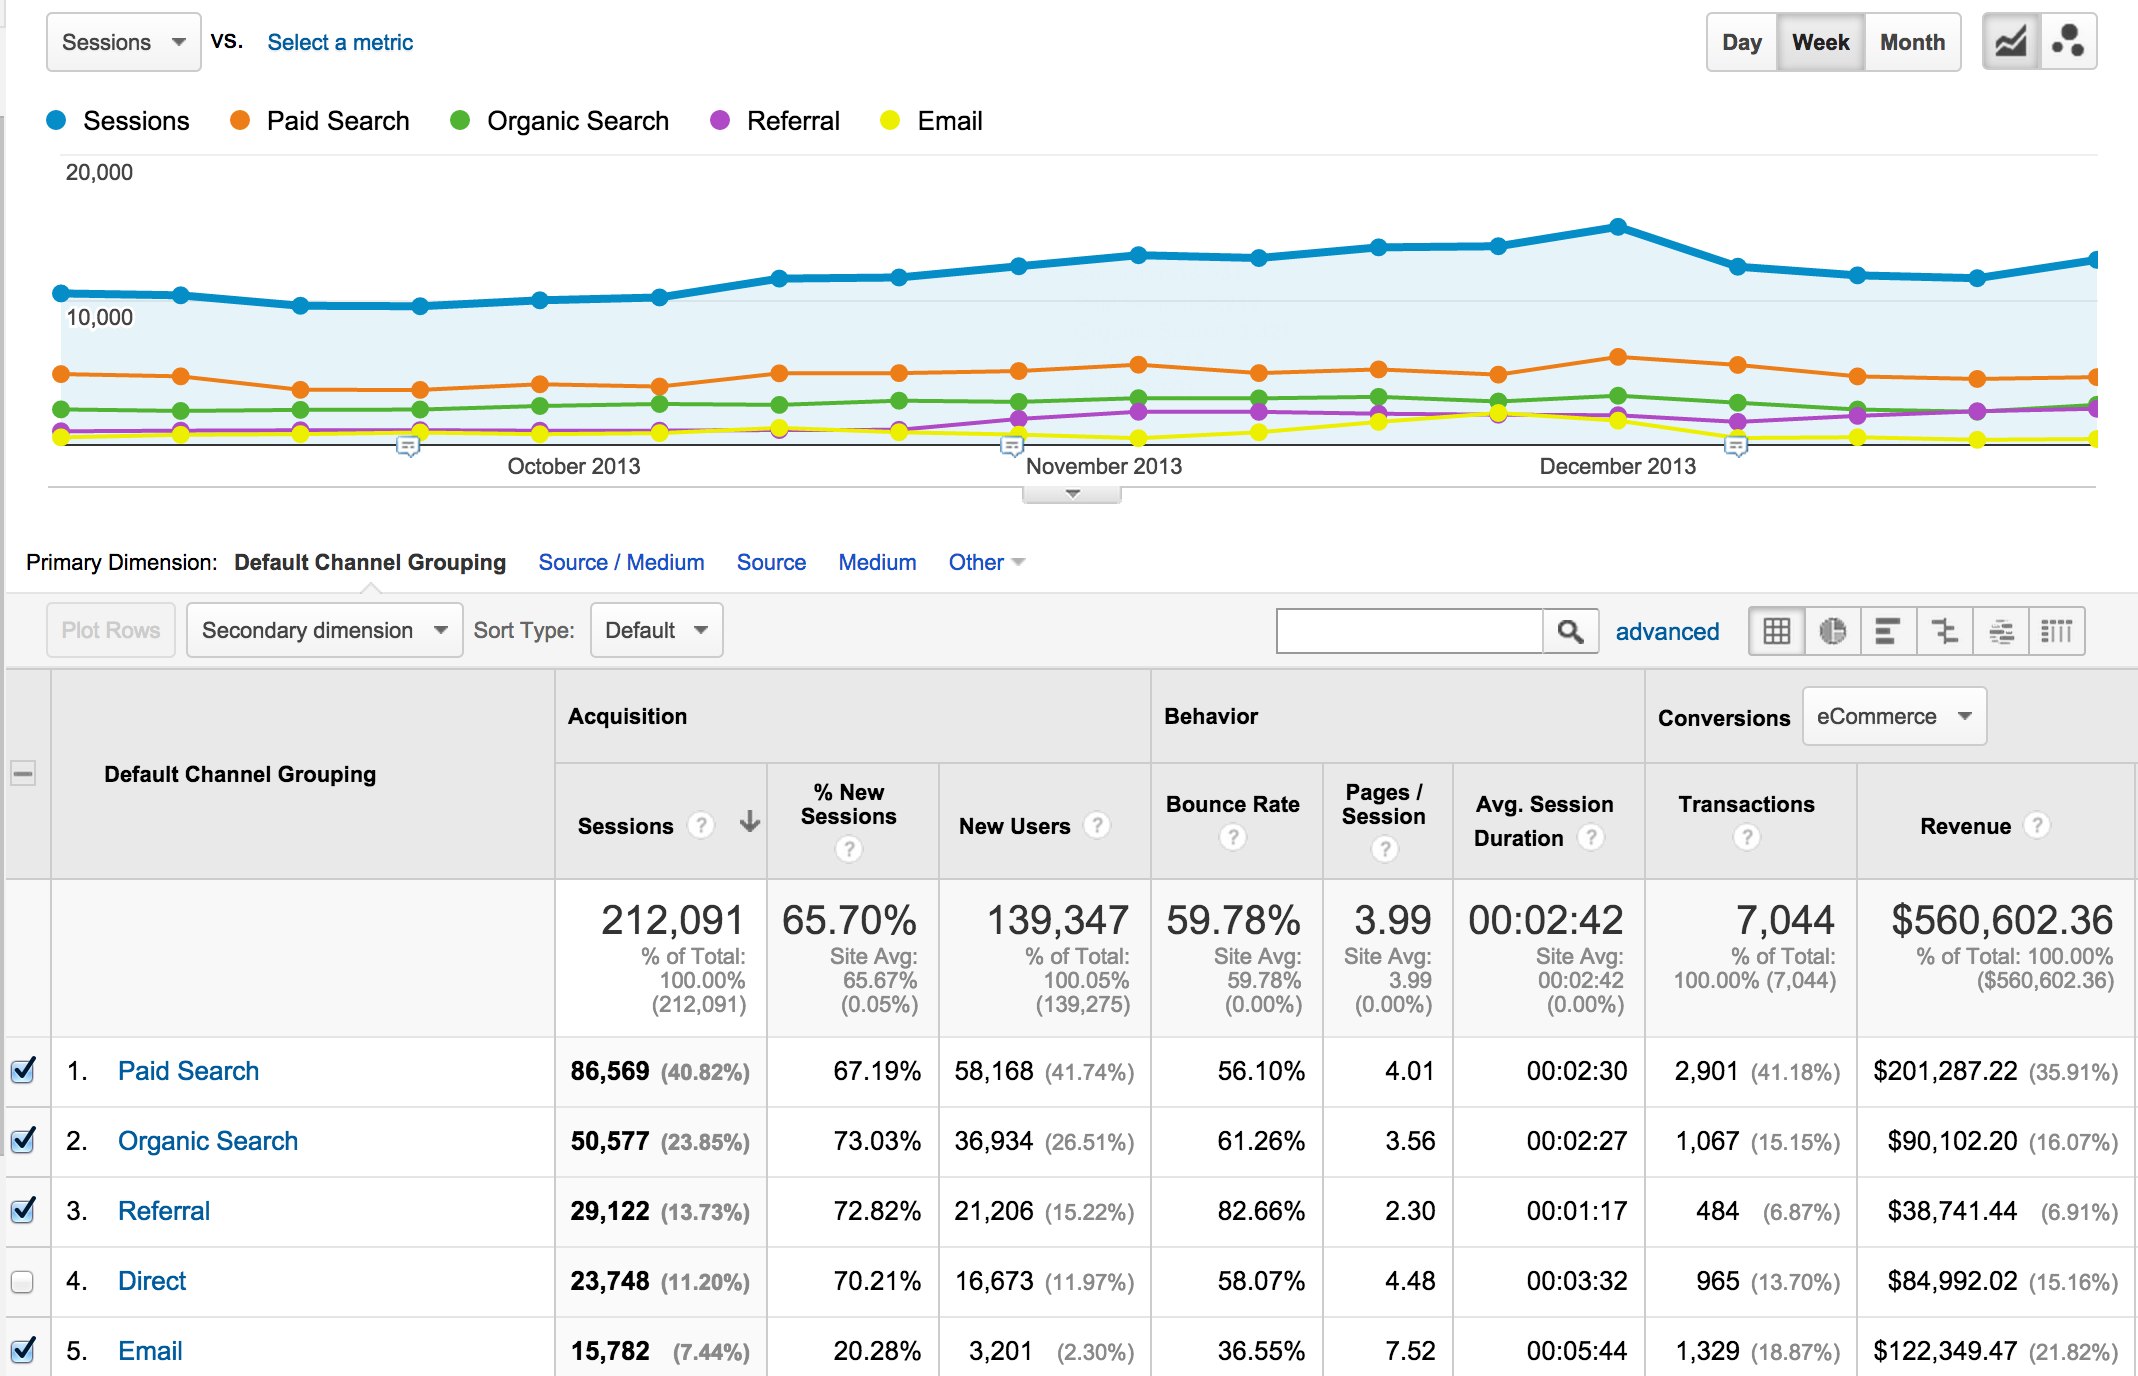 linguee.com.br Traffic Analytics, Ranking Stats & Tech Stack